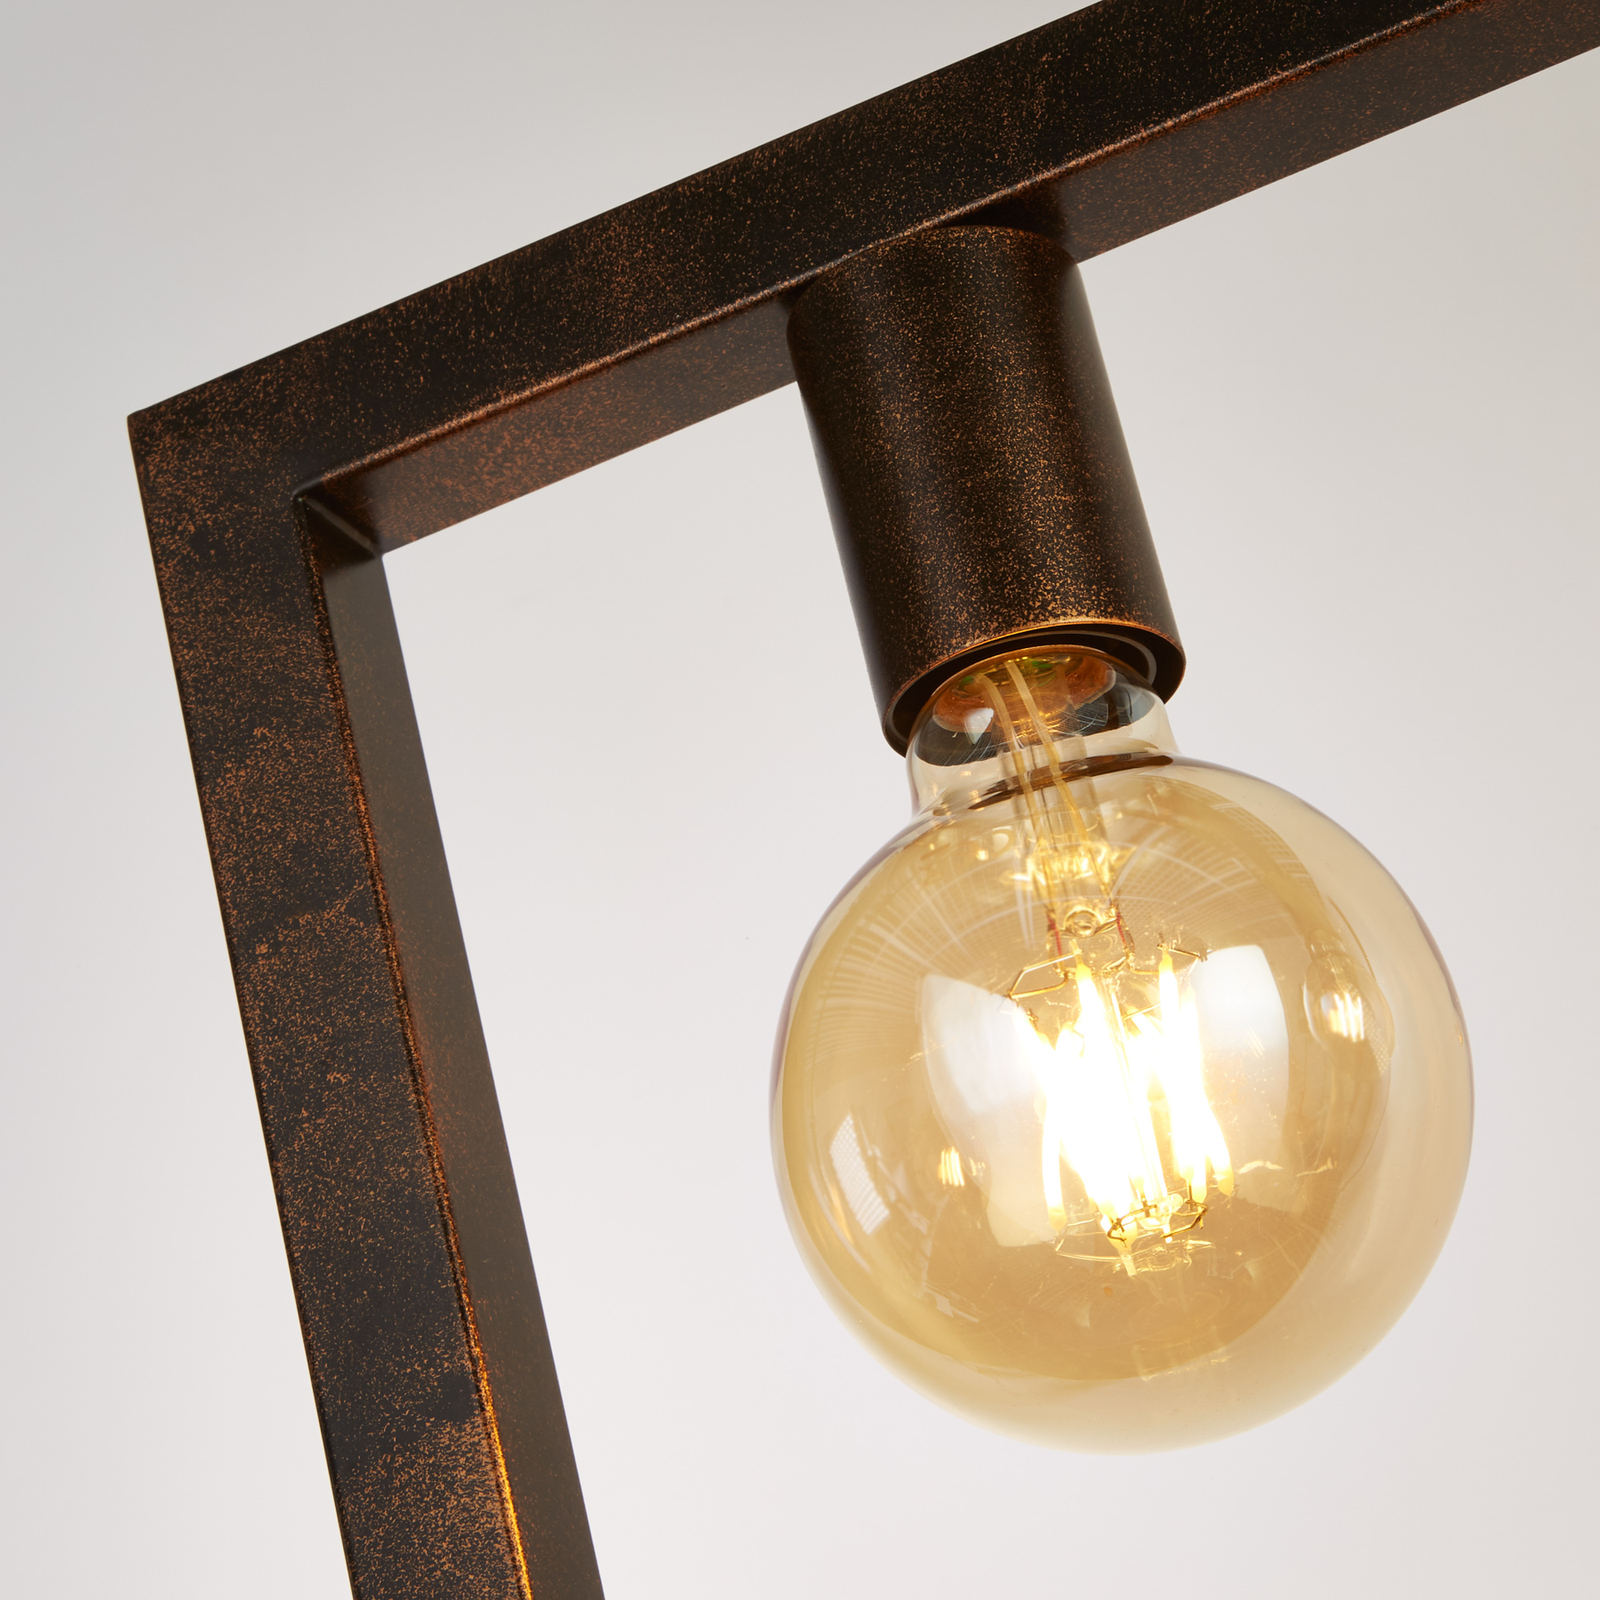 Rustic pendant light 5-bulb, rust brown